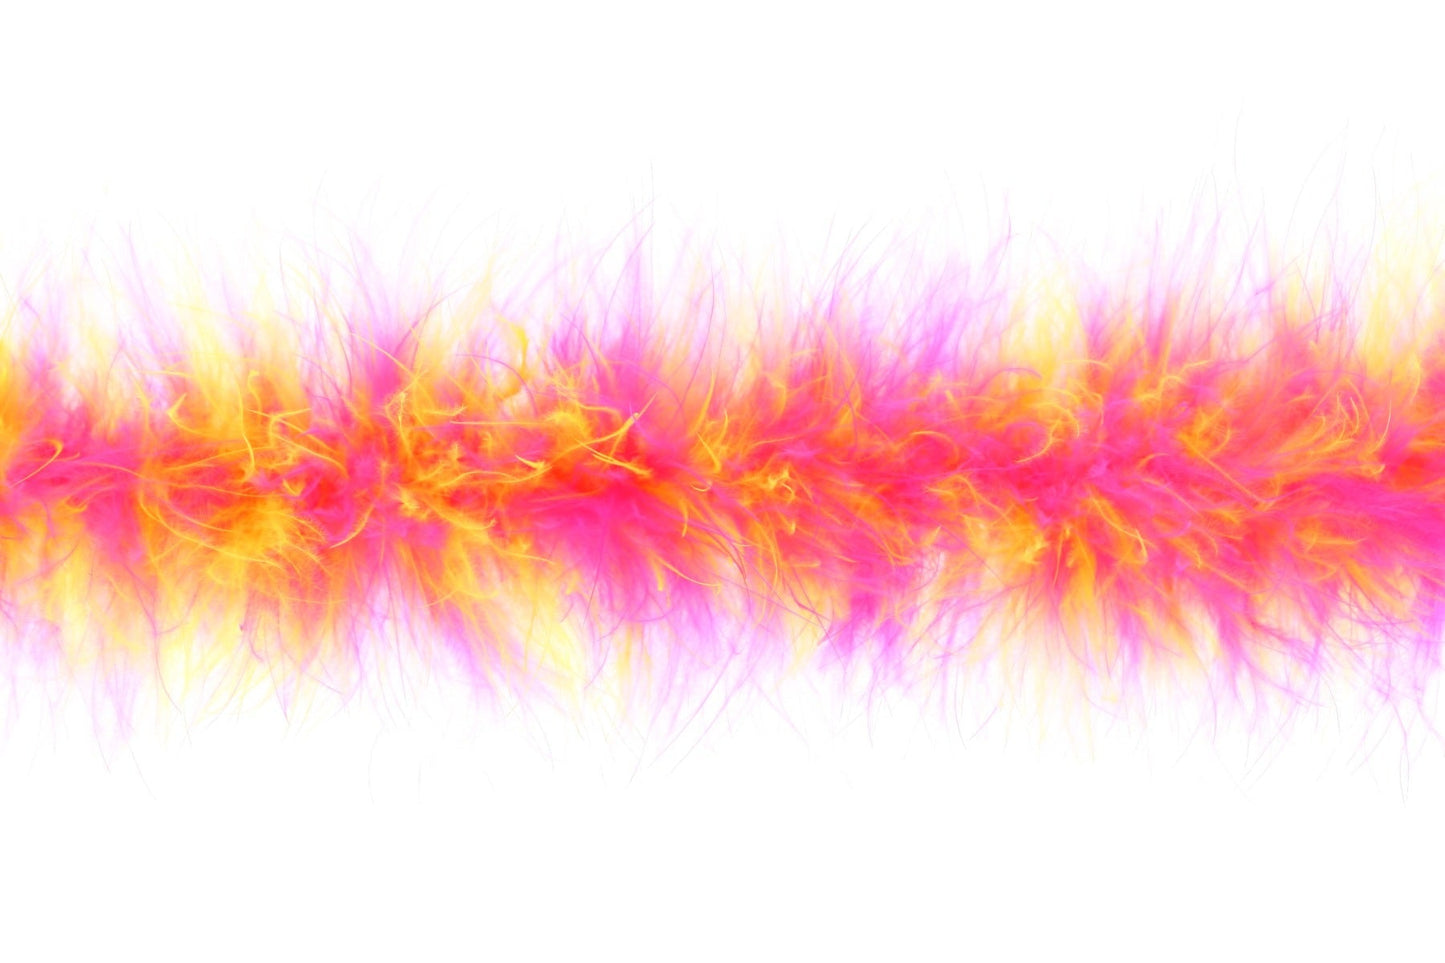 2 YARDS - Hot Pink Marabou Feather Boa 25g